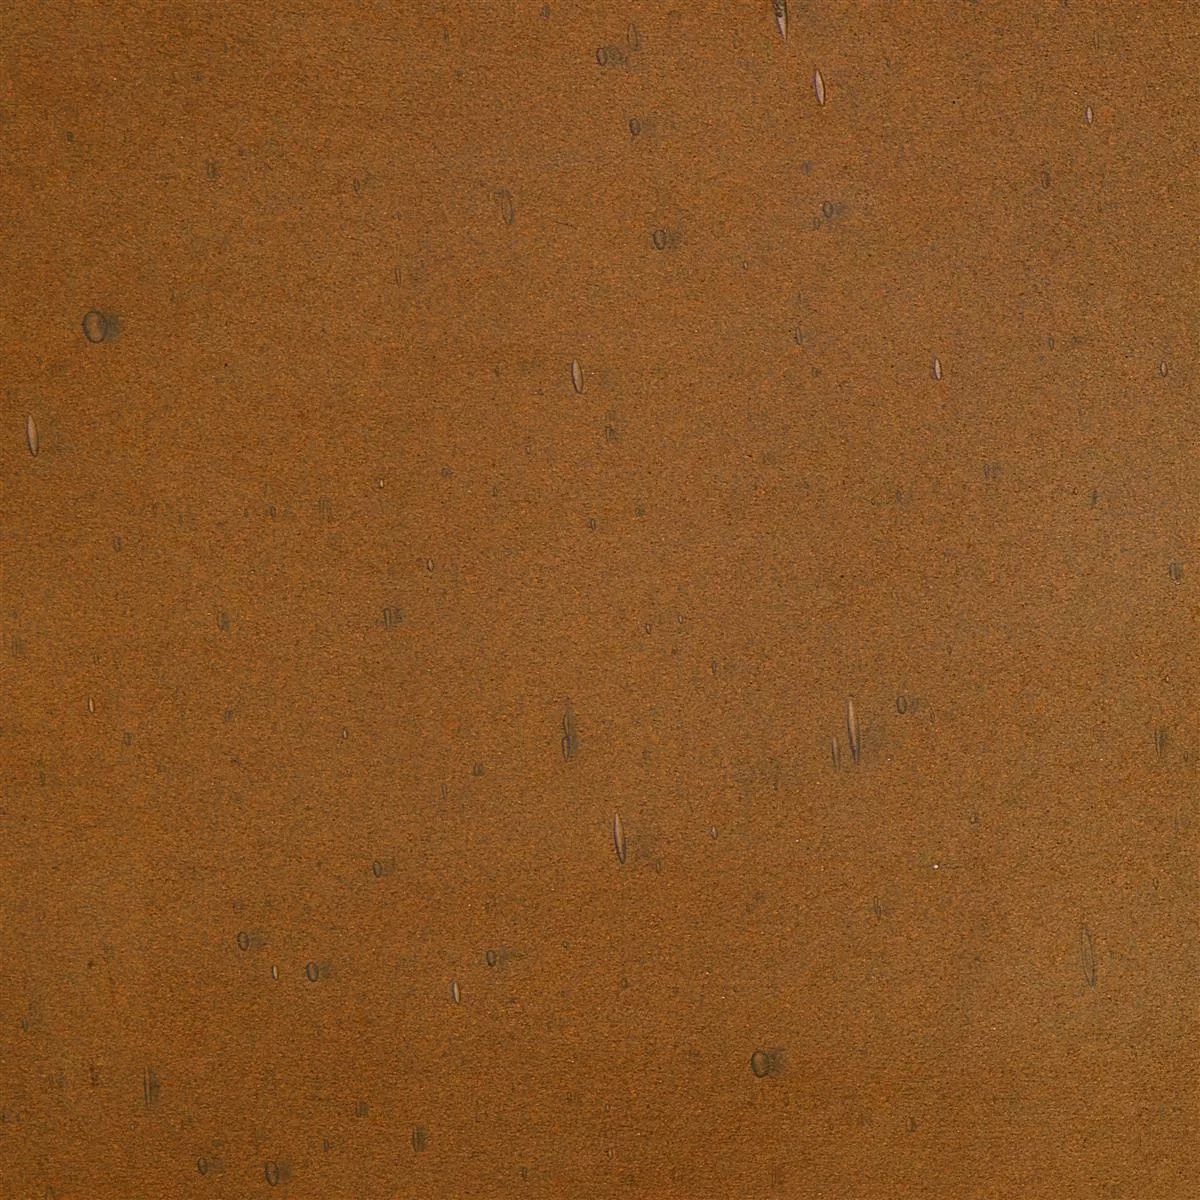 Staklo Zidne Pločice Trend-Vi Supreme Copper 30x60cm